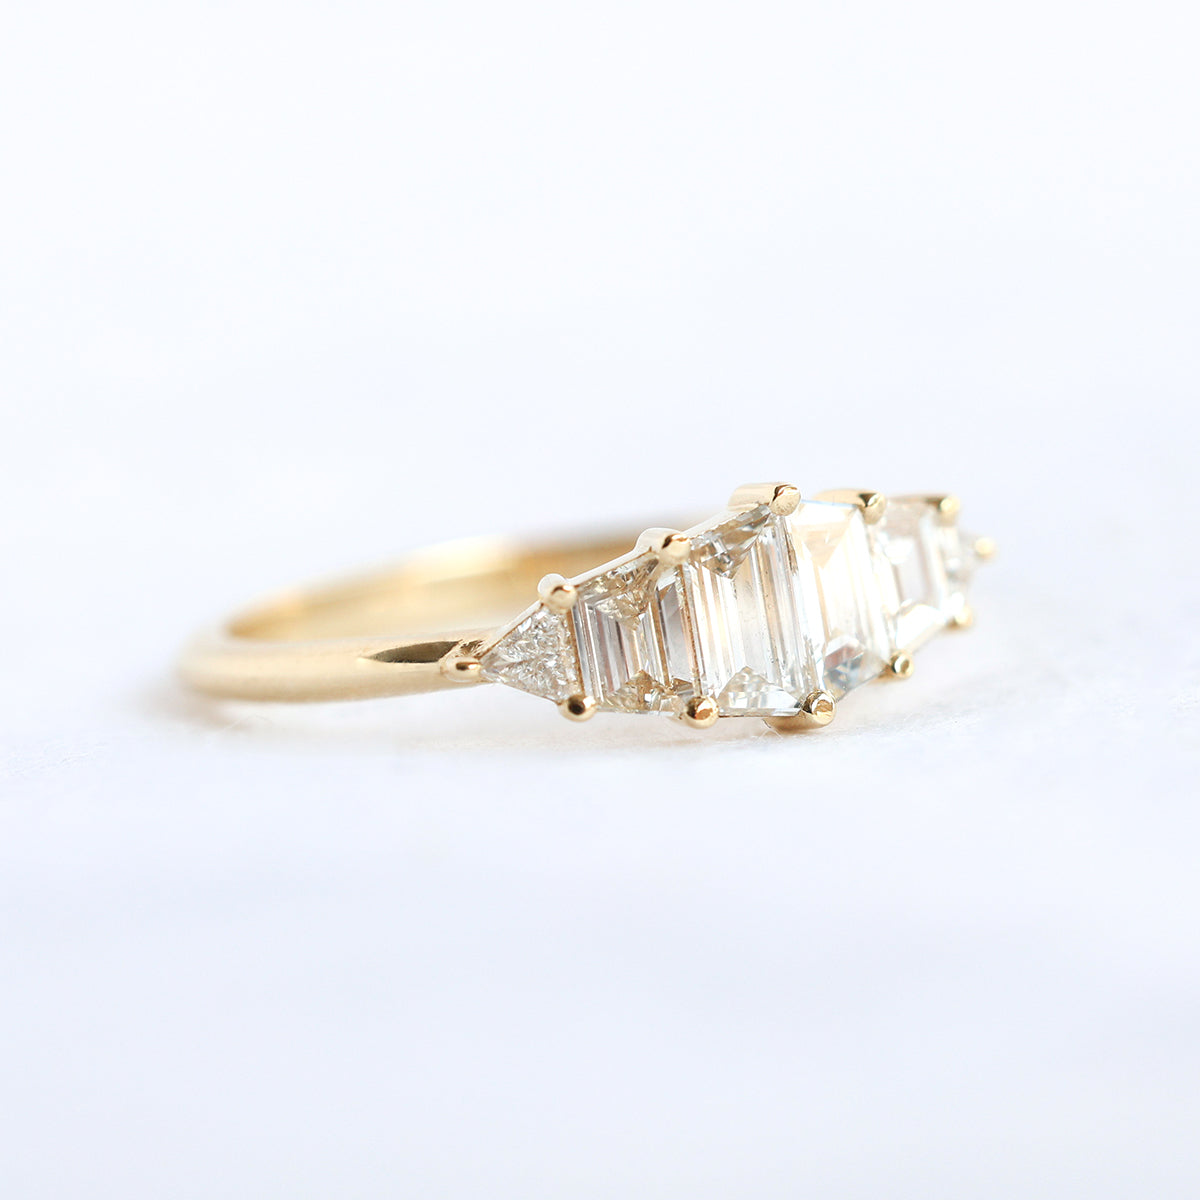 Interesting Trapezoid-Cut White Diamond Ring with shiny side White Diamonds